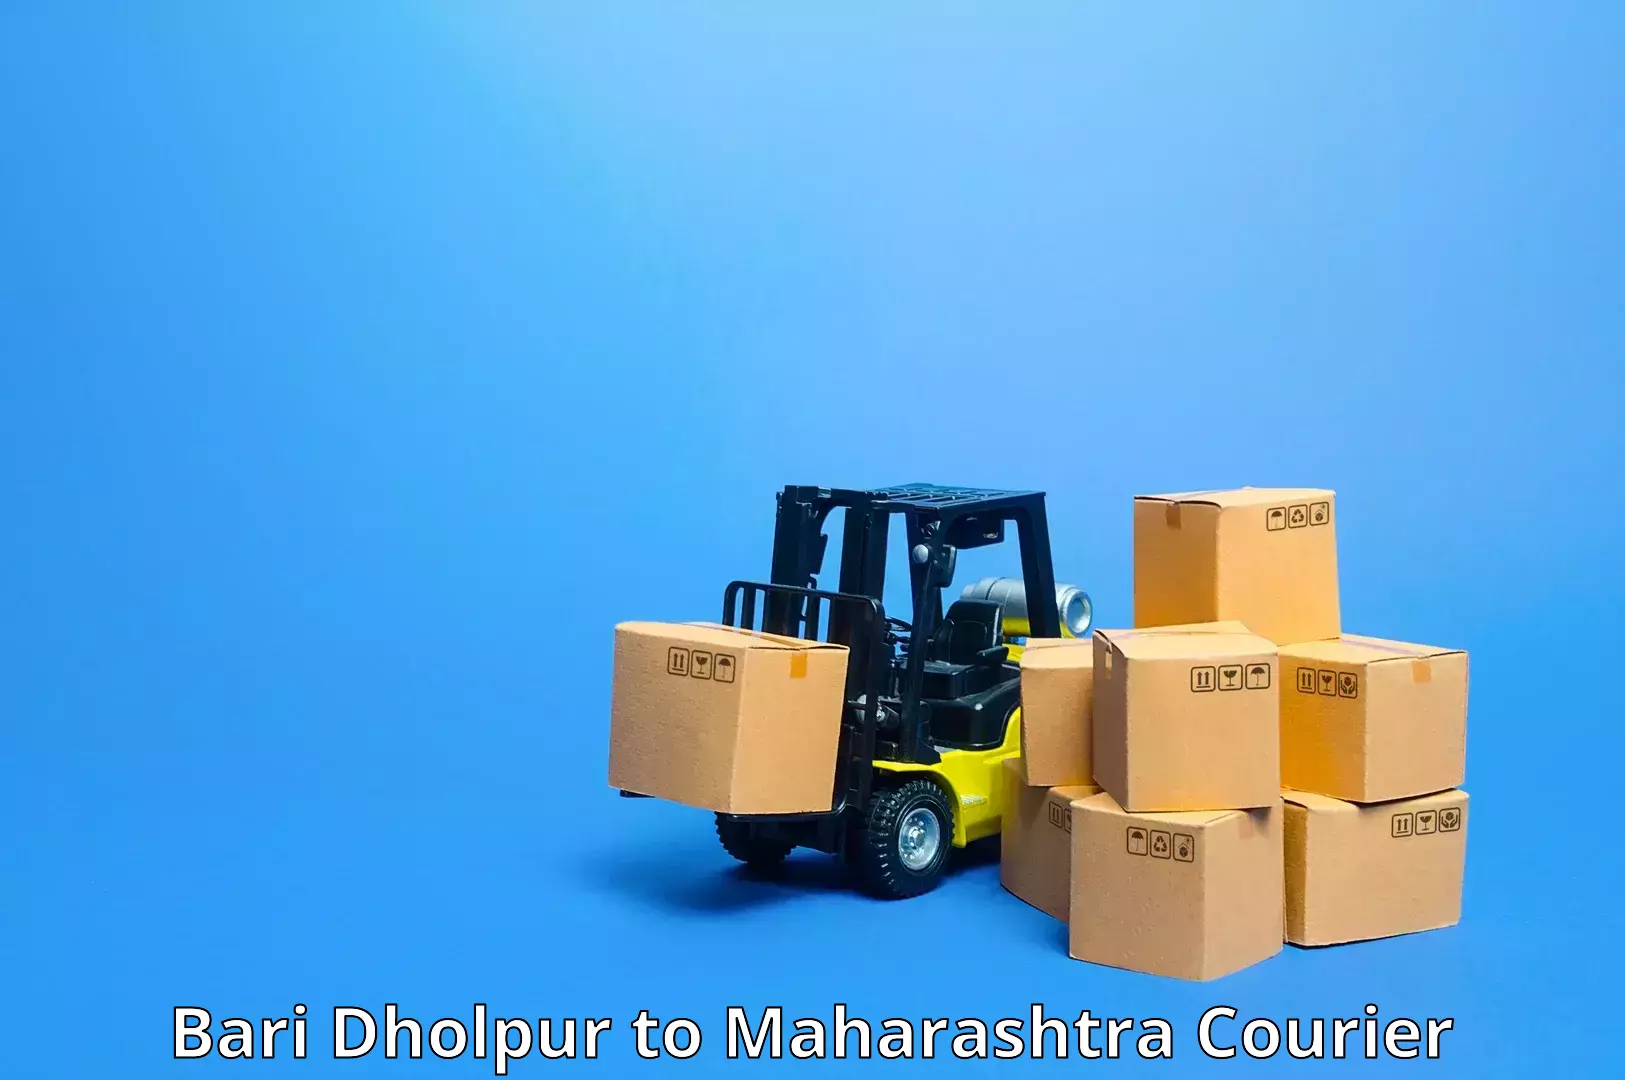 International parcel service Bari Dholpur to Maharashtra